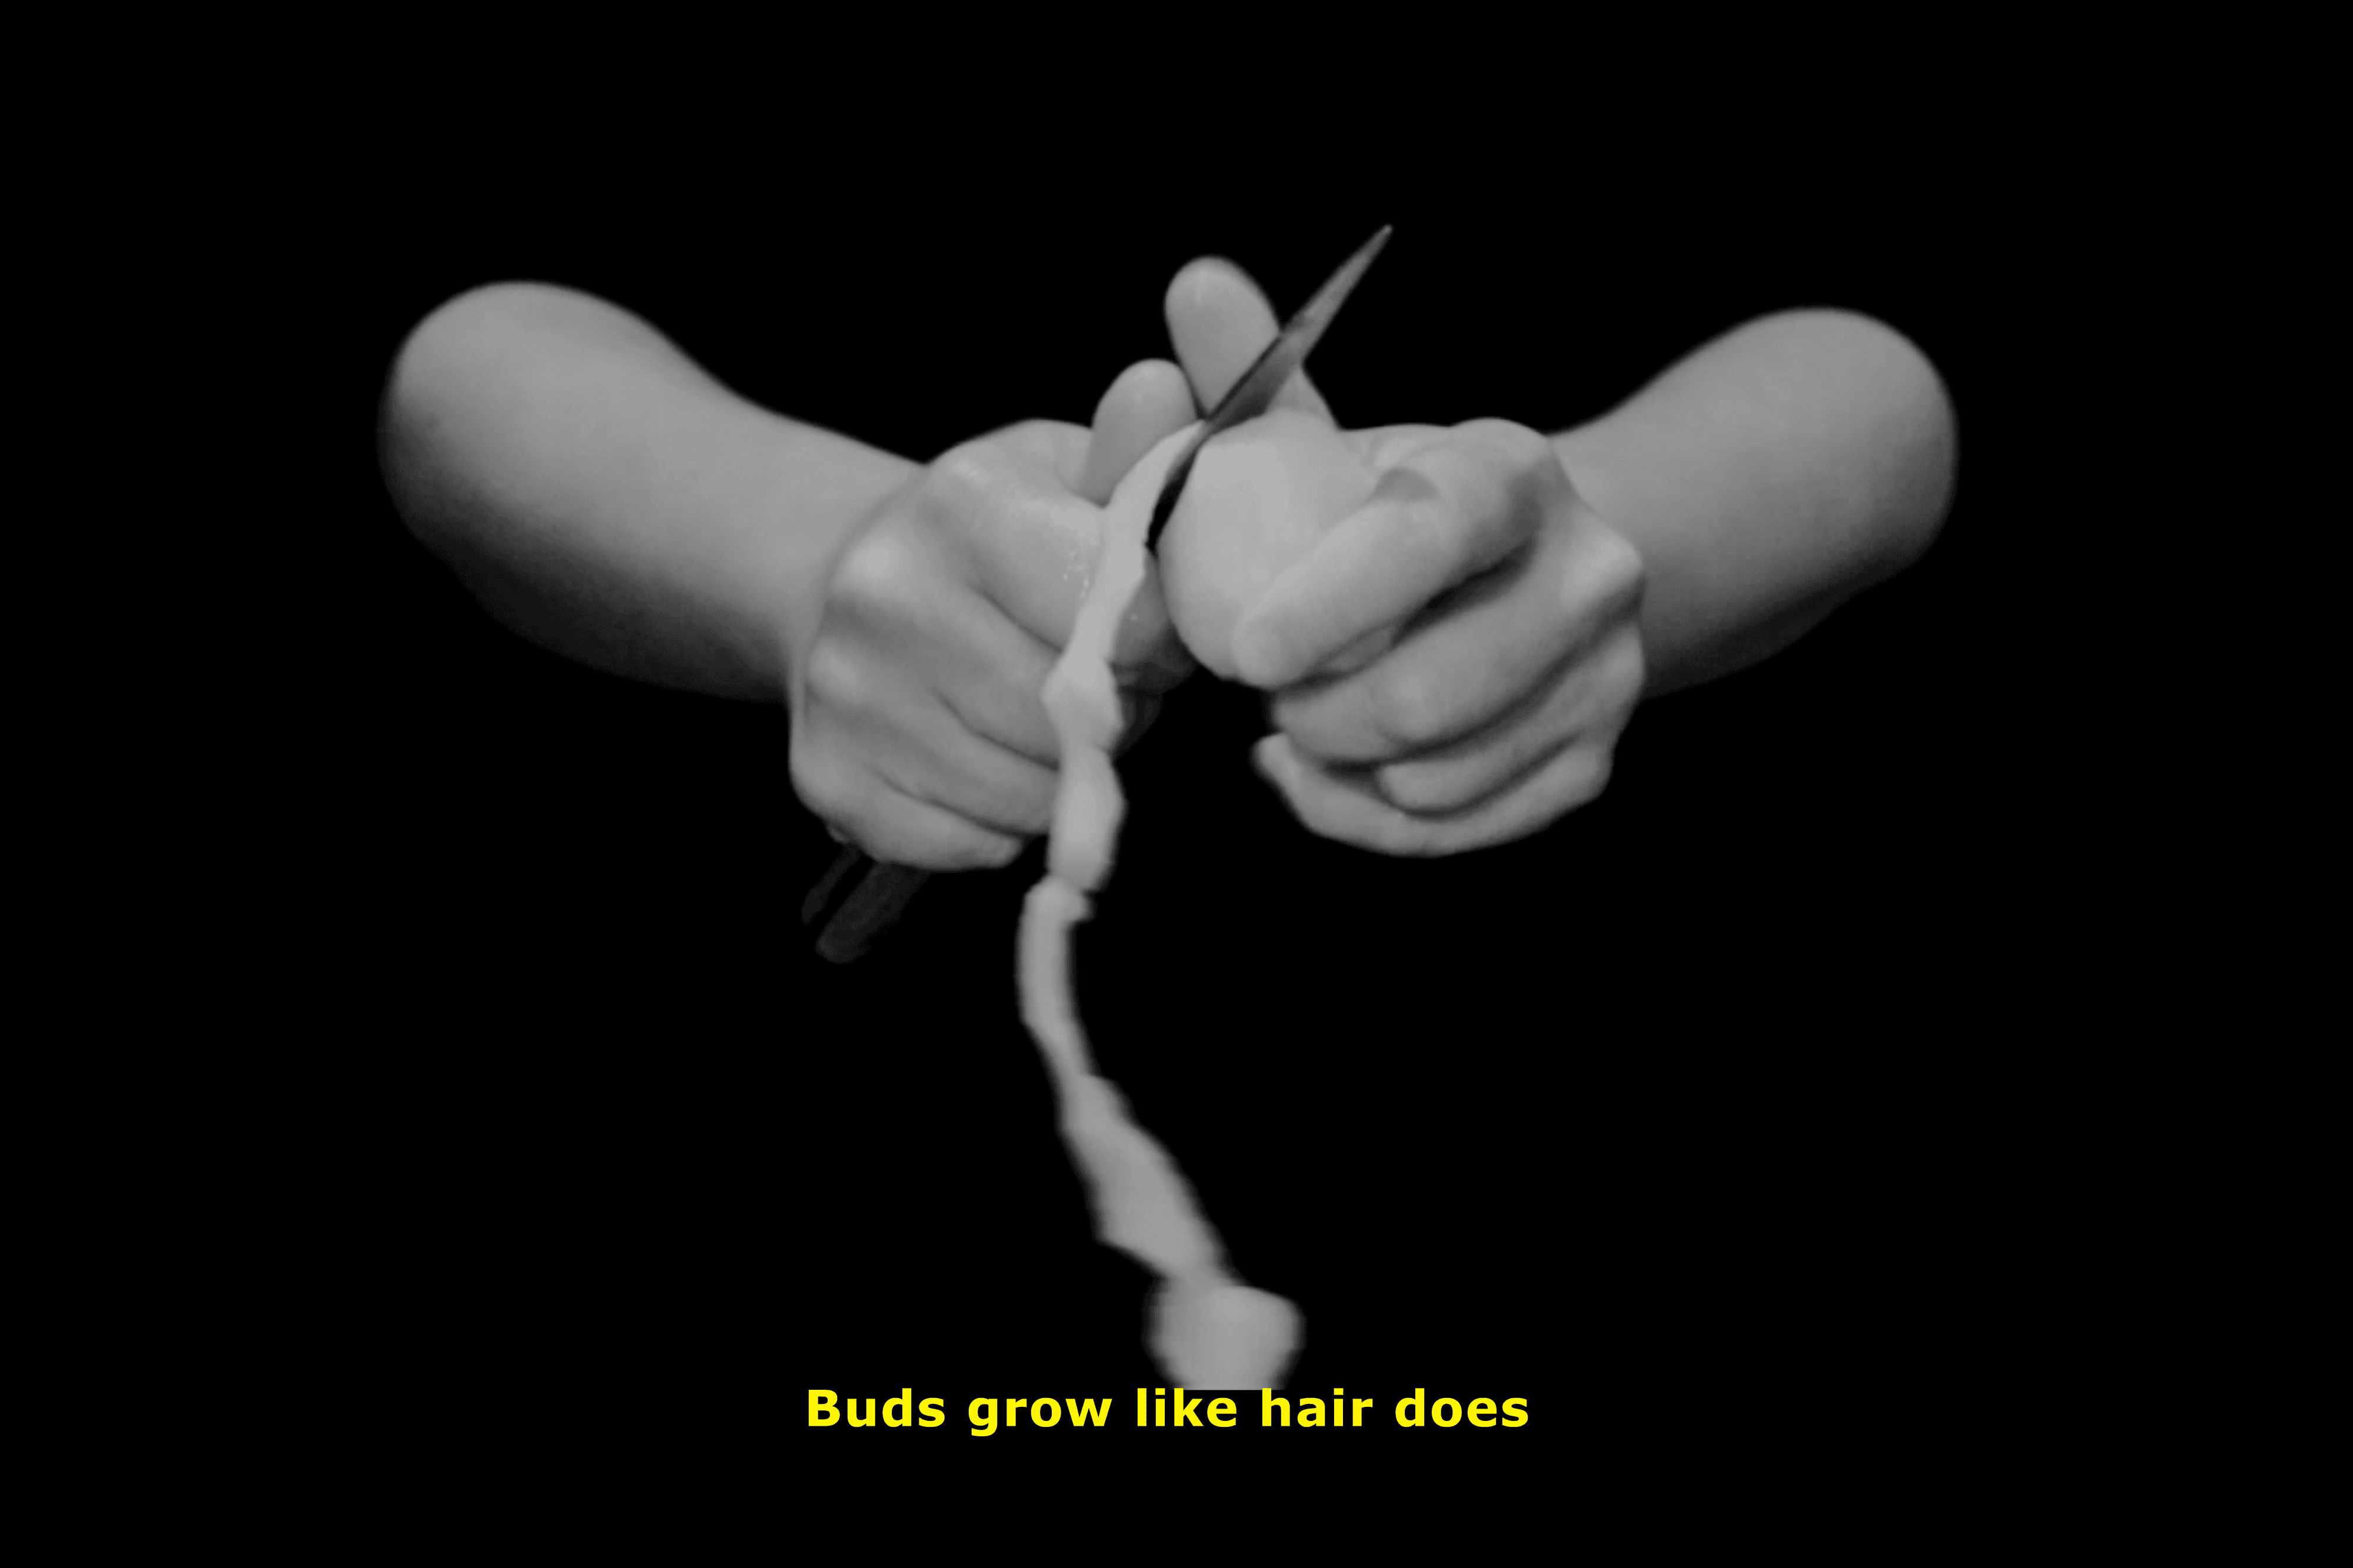 Buds grow like hair does